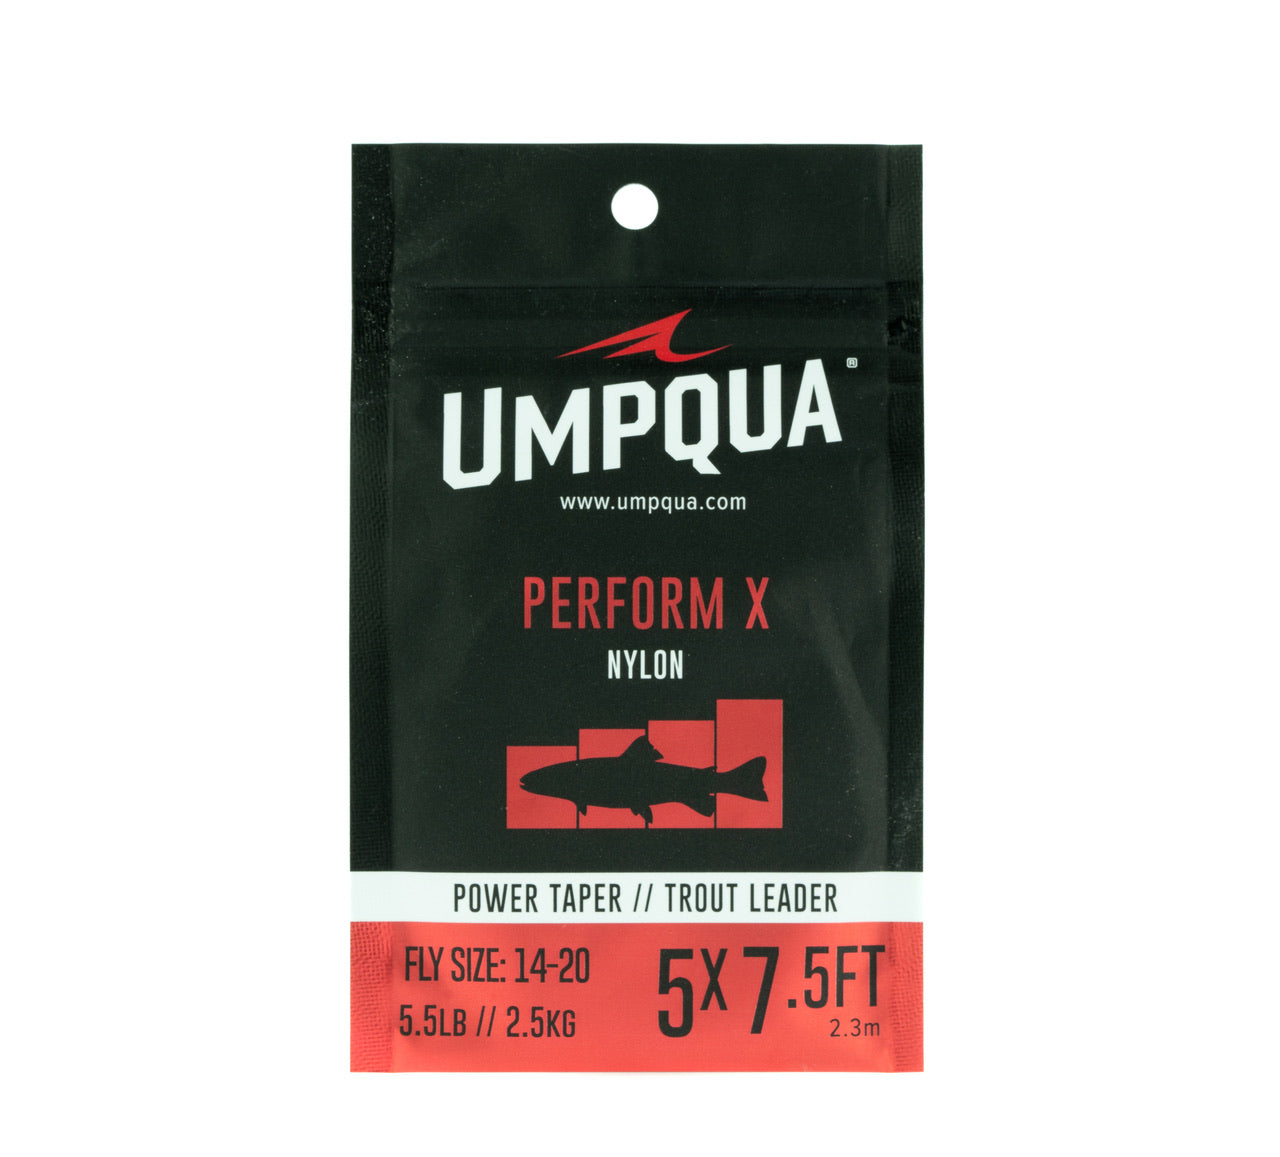 Umpqua Perform X Nylon Power Taper // Trout Leader (3pk)